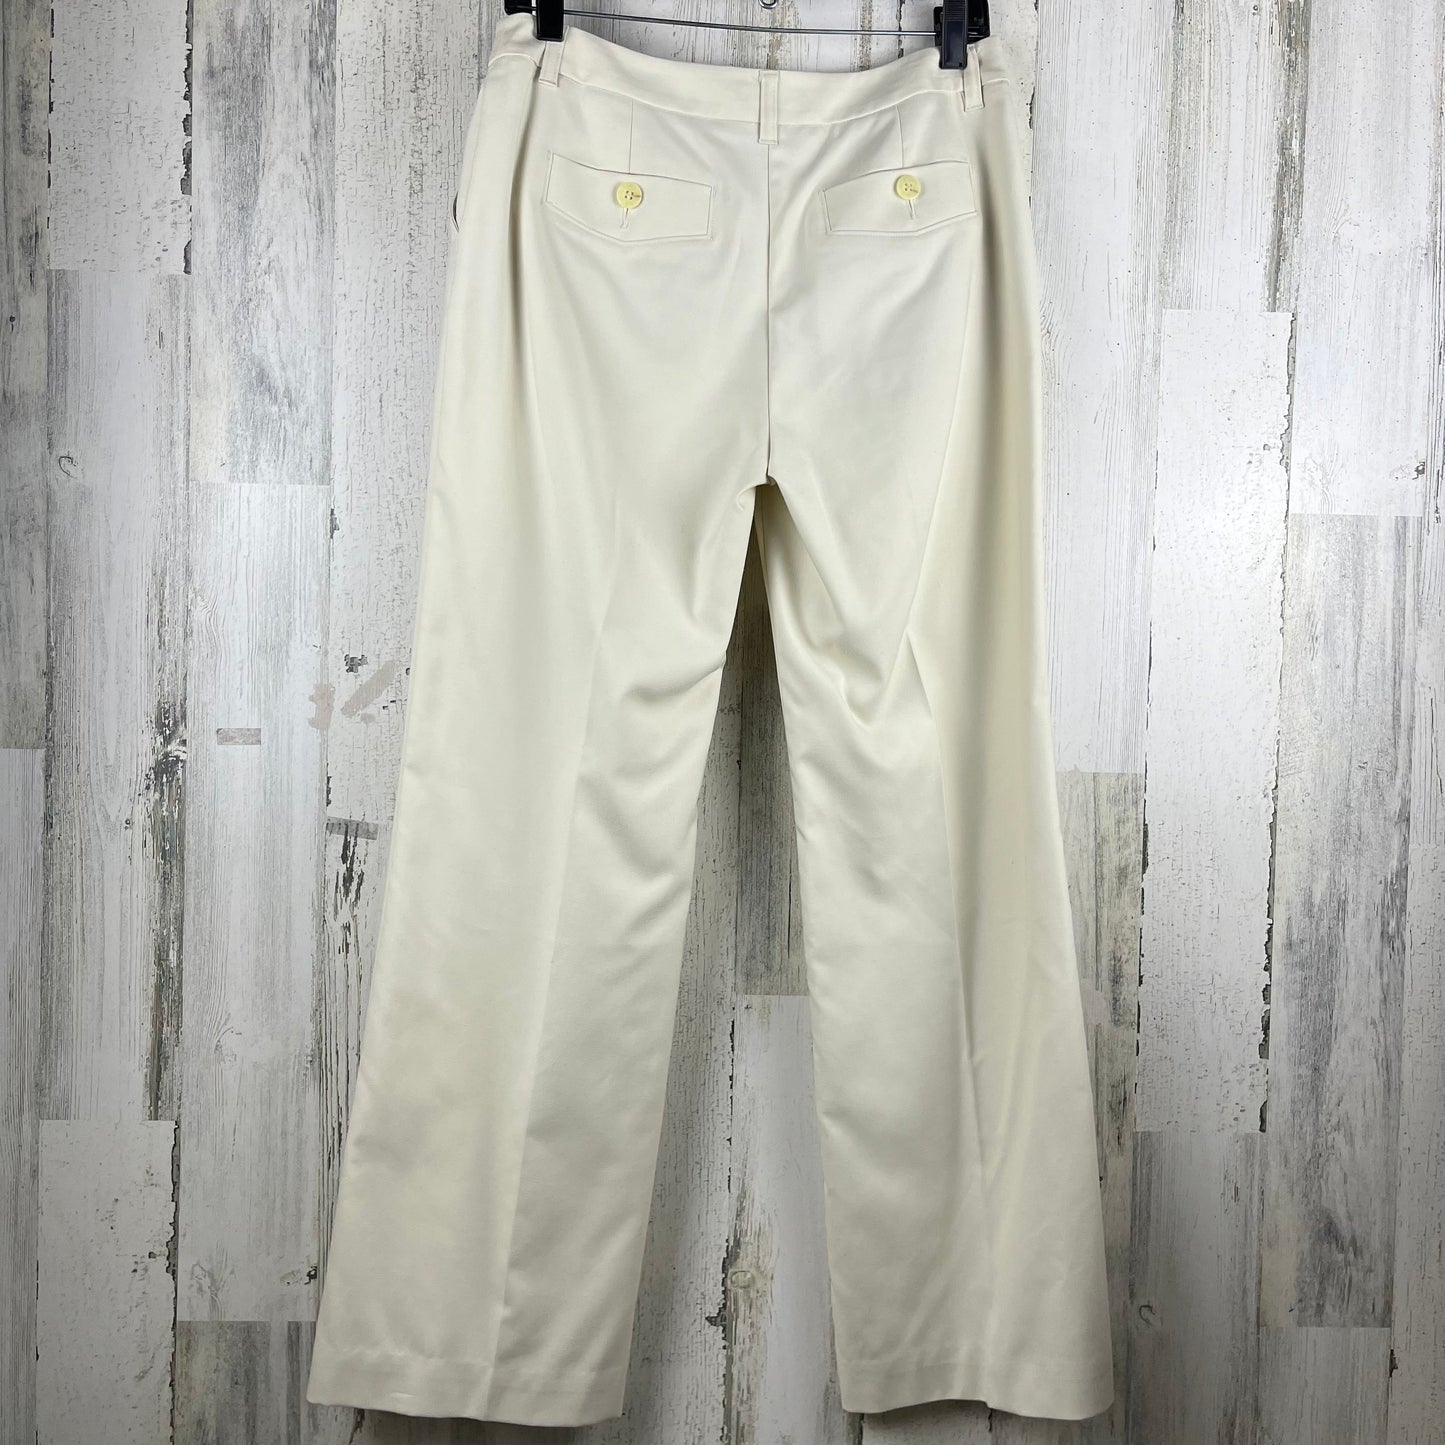 Pants Work/dress By Anne Klein  Size: 6